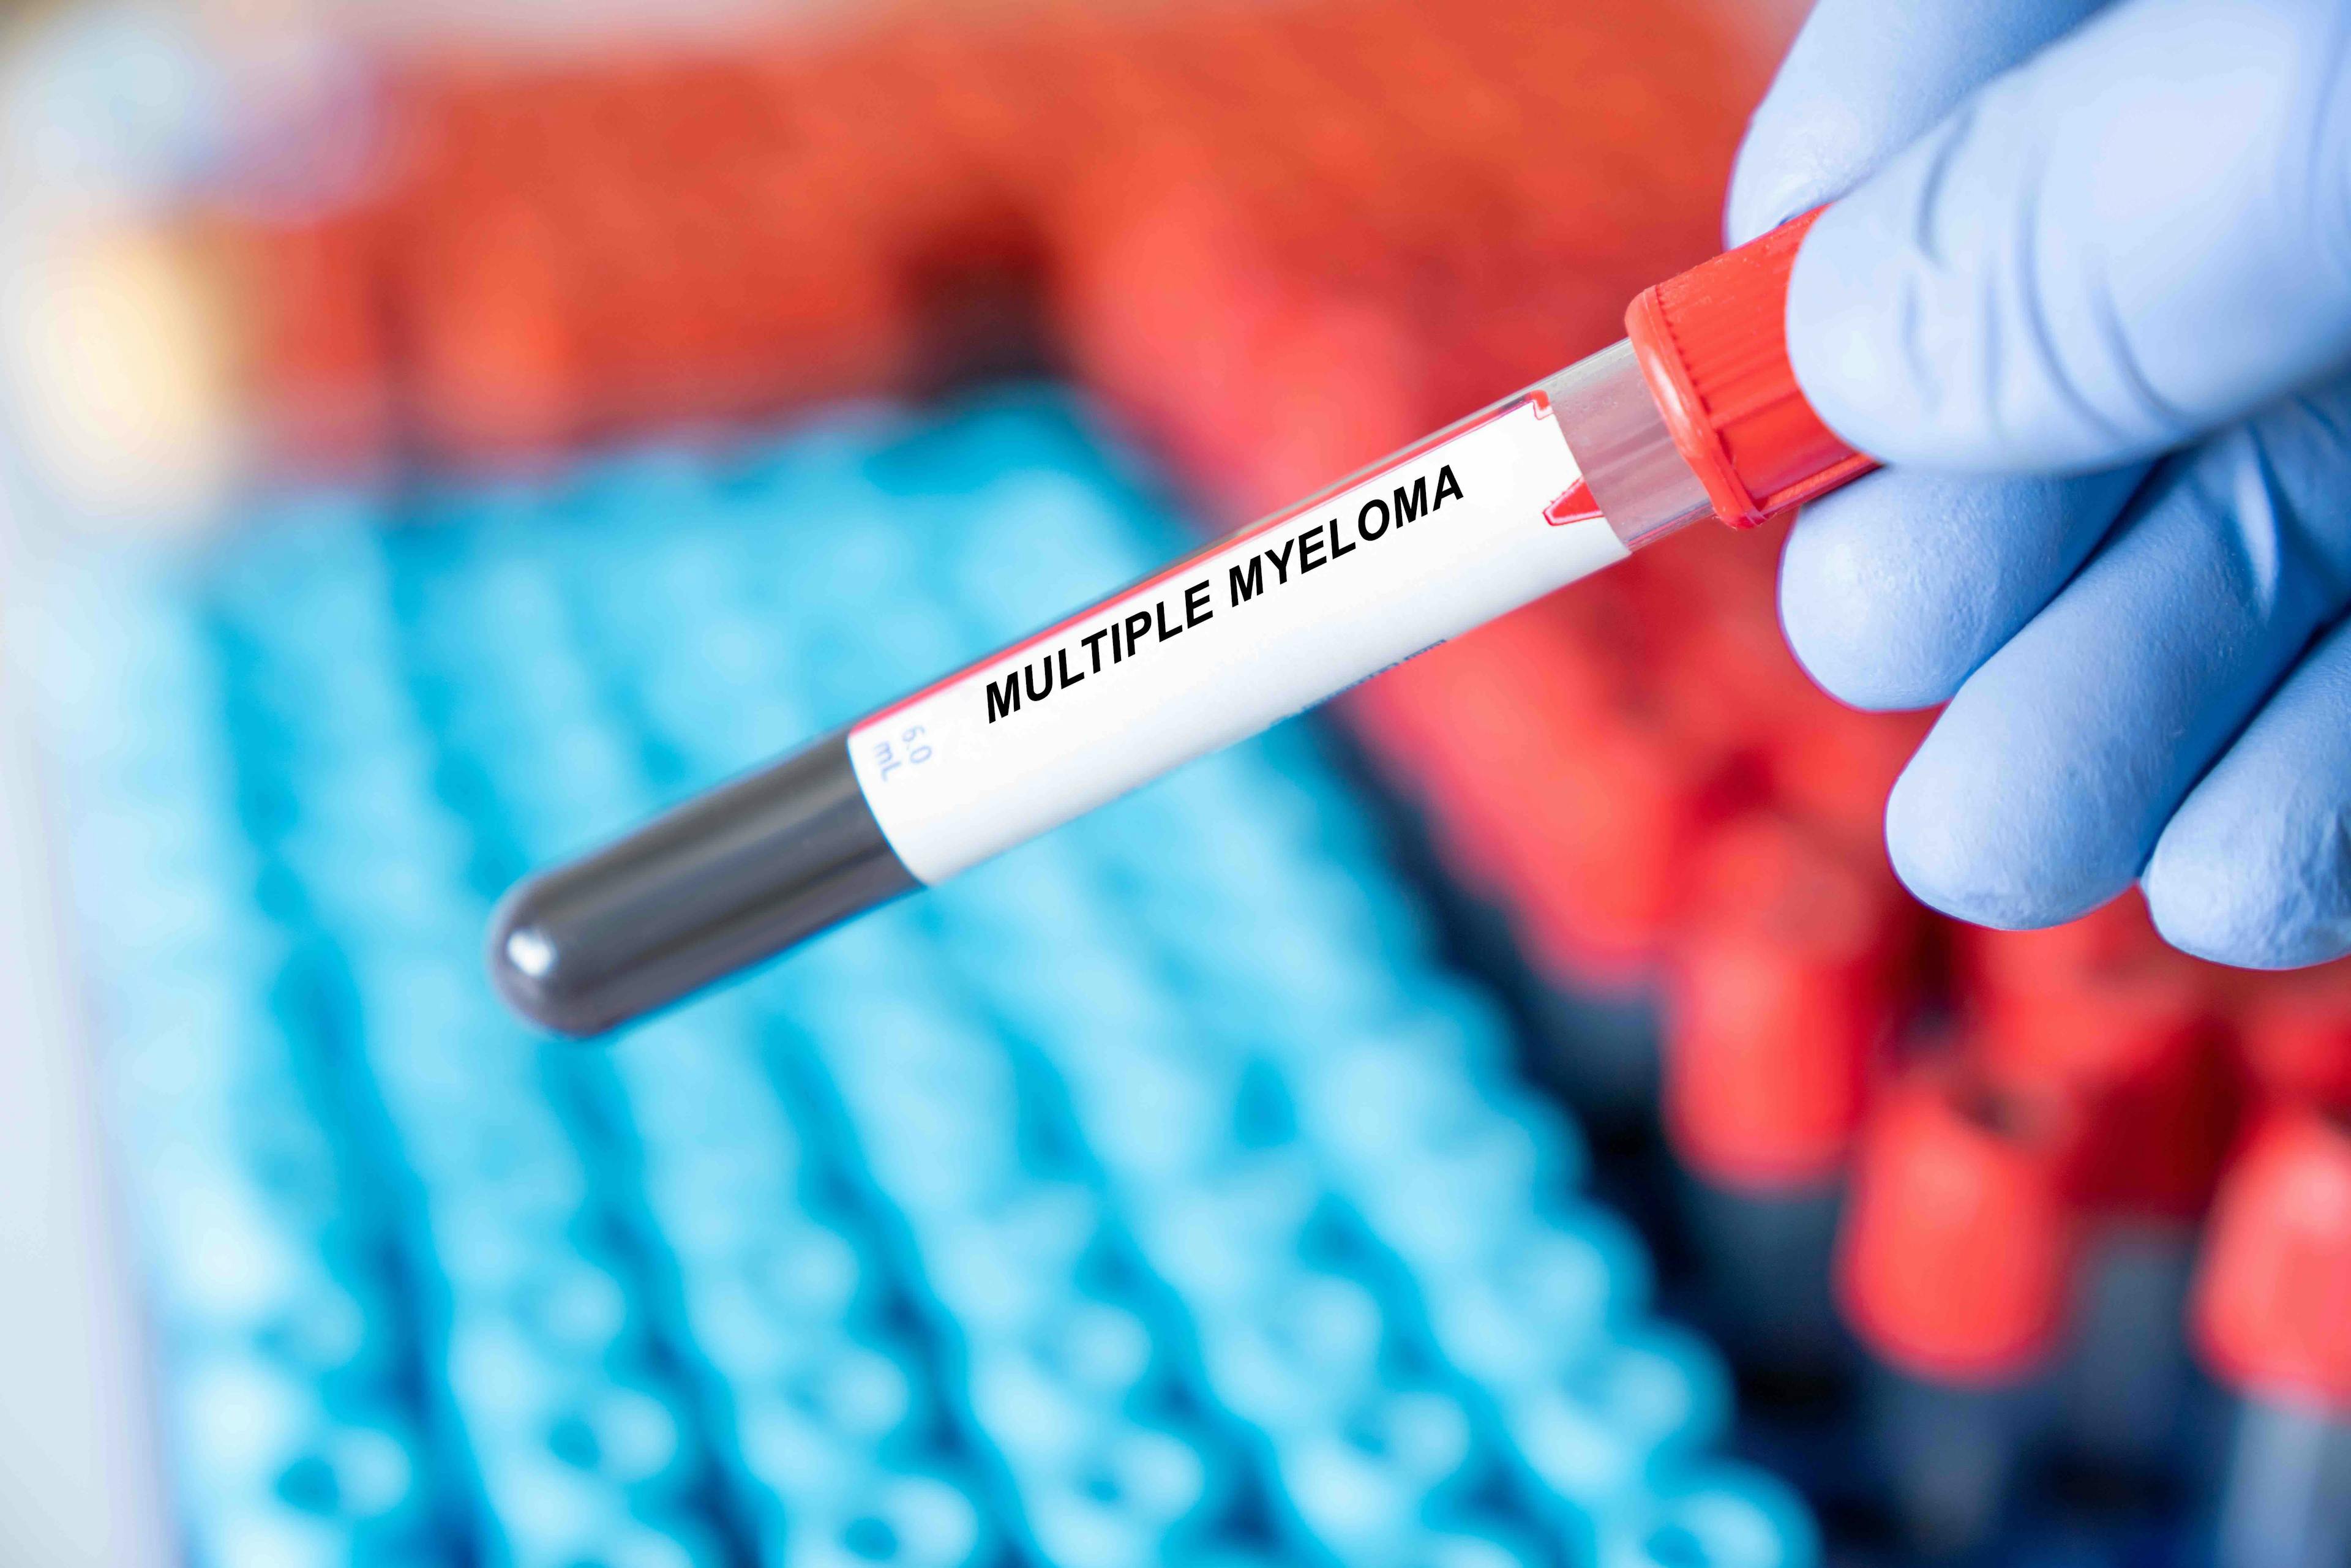 Multiple myeloma blood testing - luchschenF - stock.adobe.com